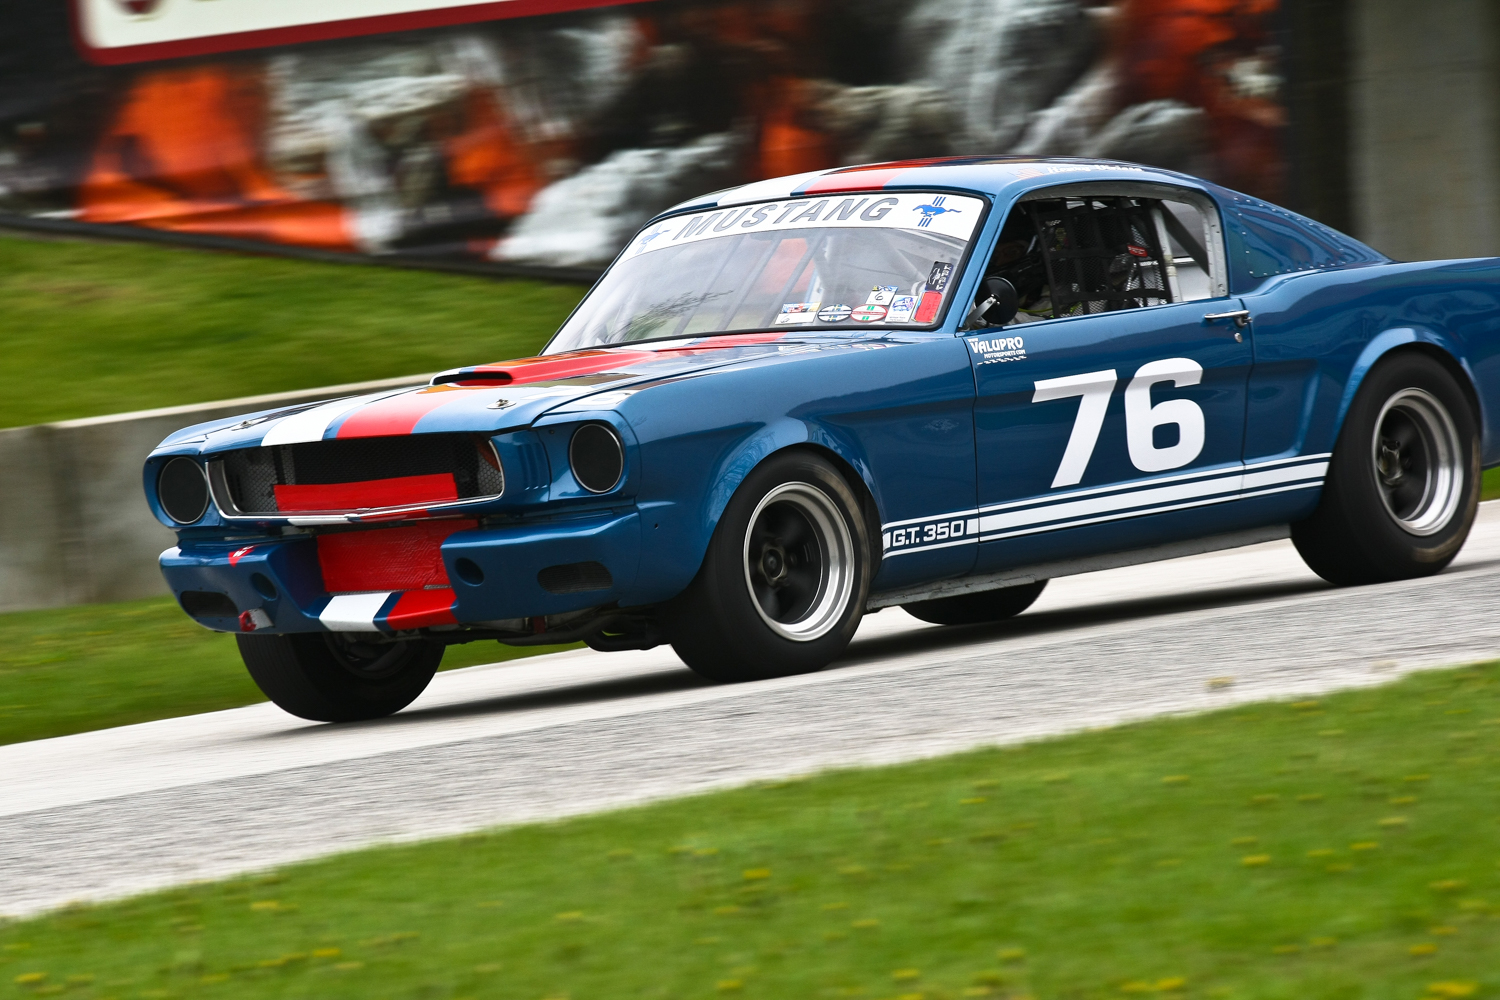 #76 - Henry Vicioso - 1965 Mustang. Photo: Jeff Schabowski